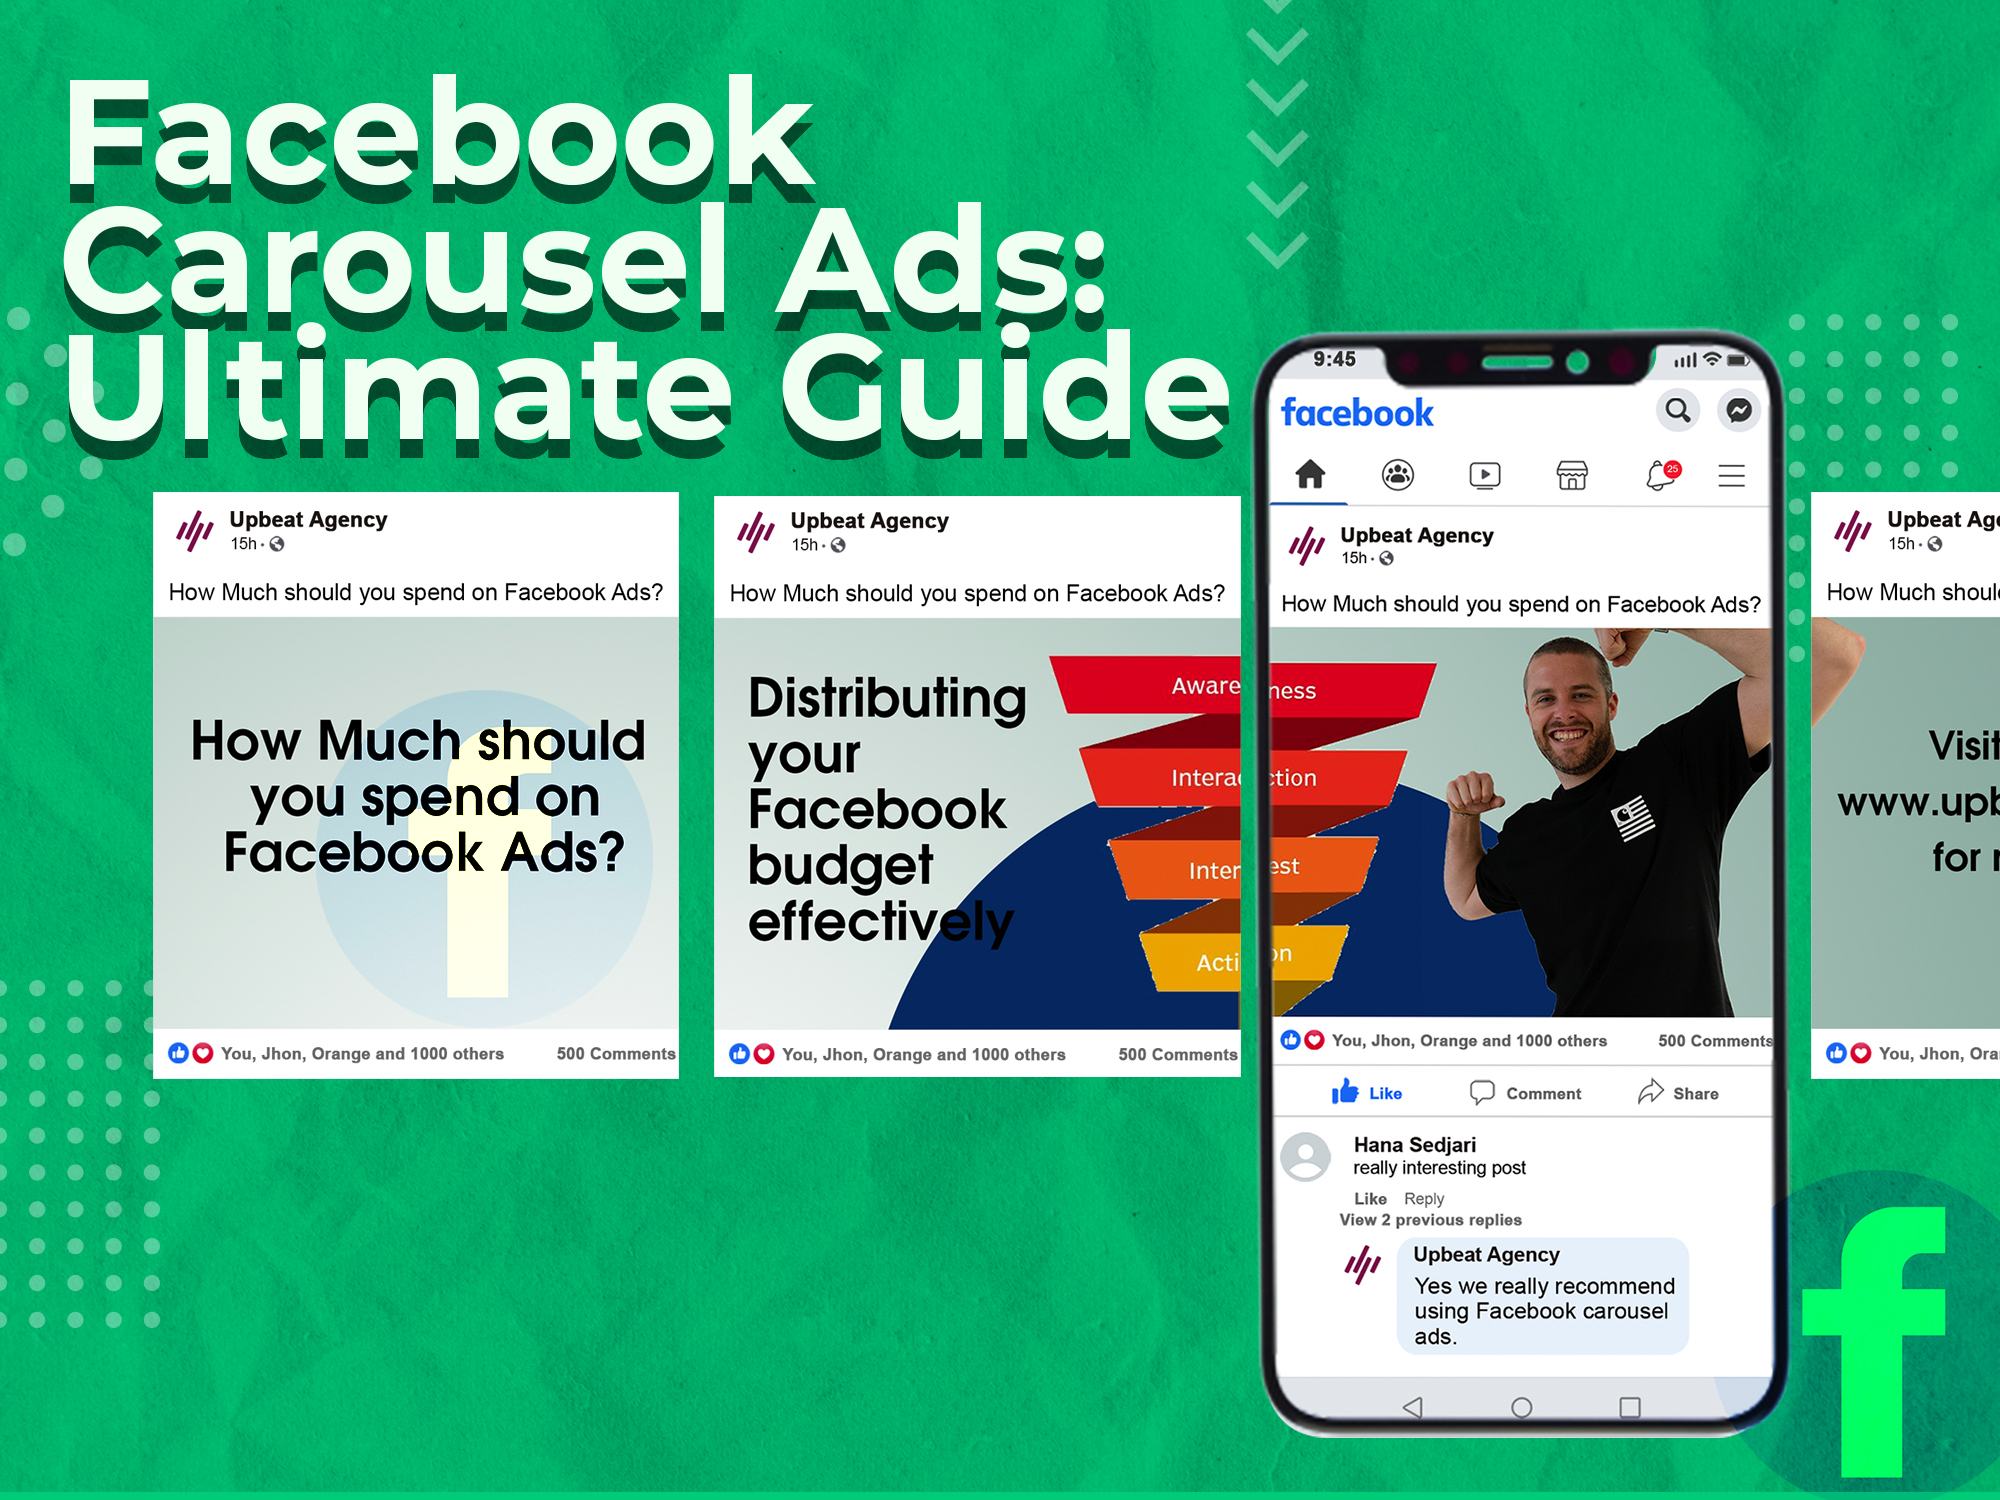 Facebook Carousel Ads: Ultimate Guide